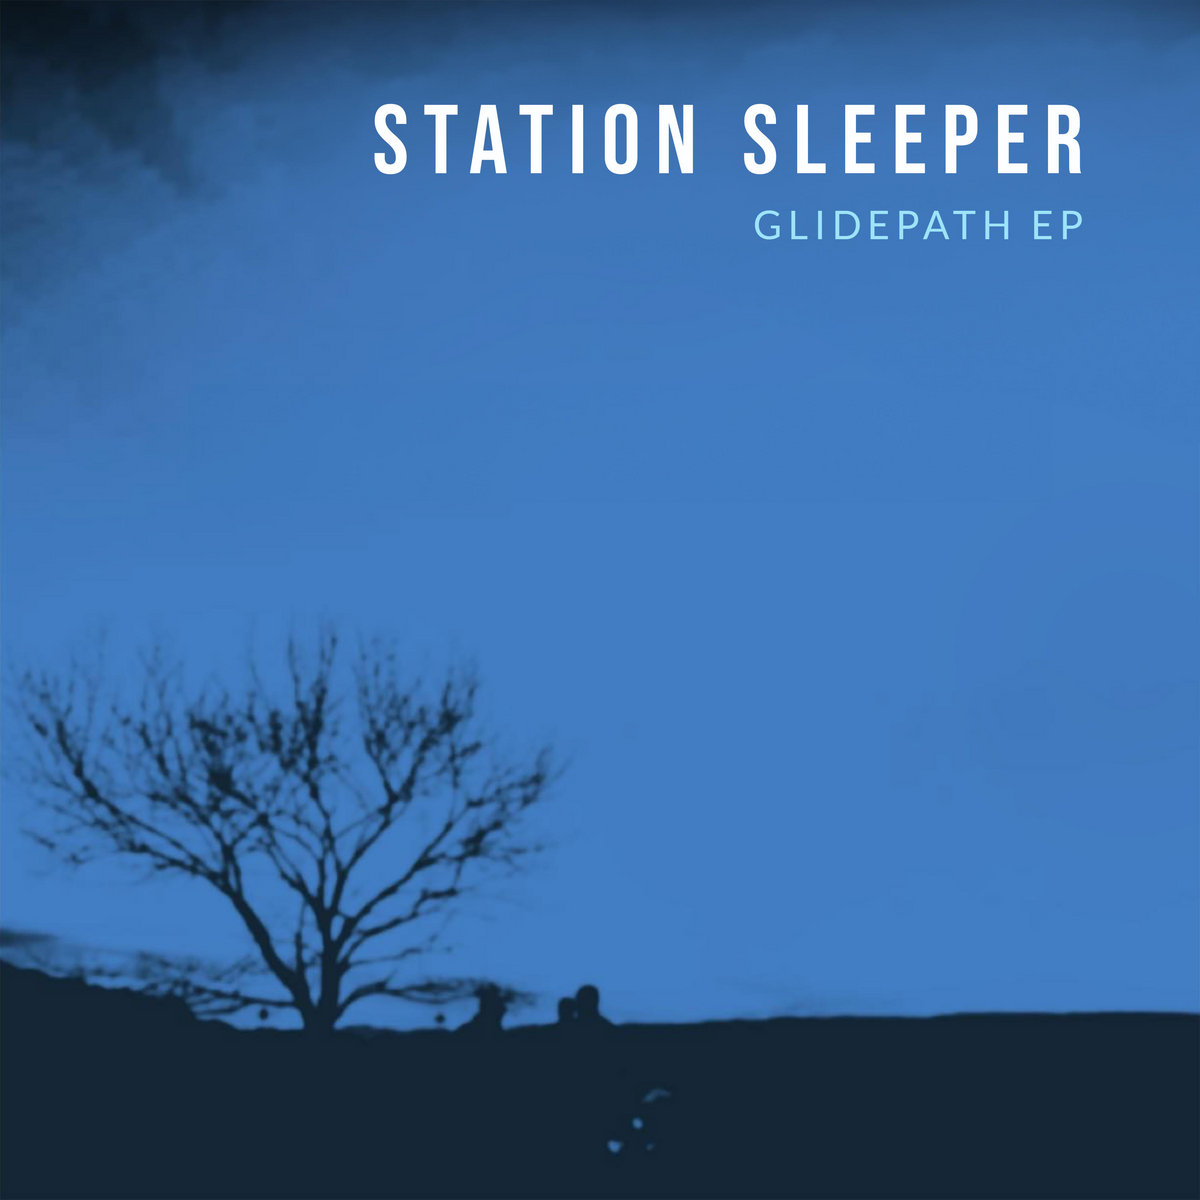 station sleeper glidepath EP